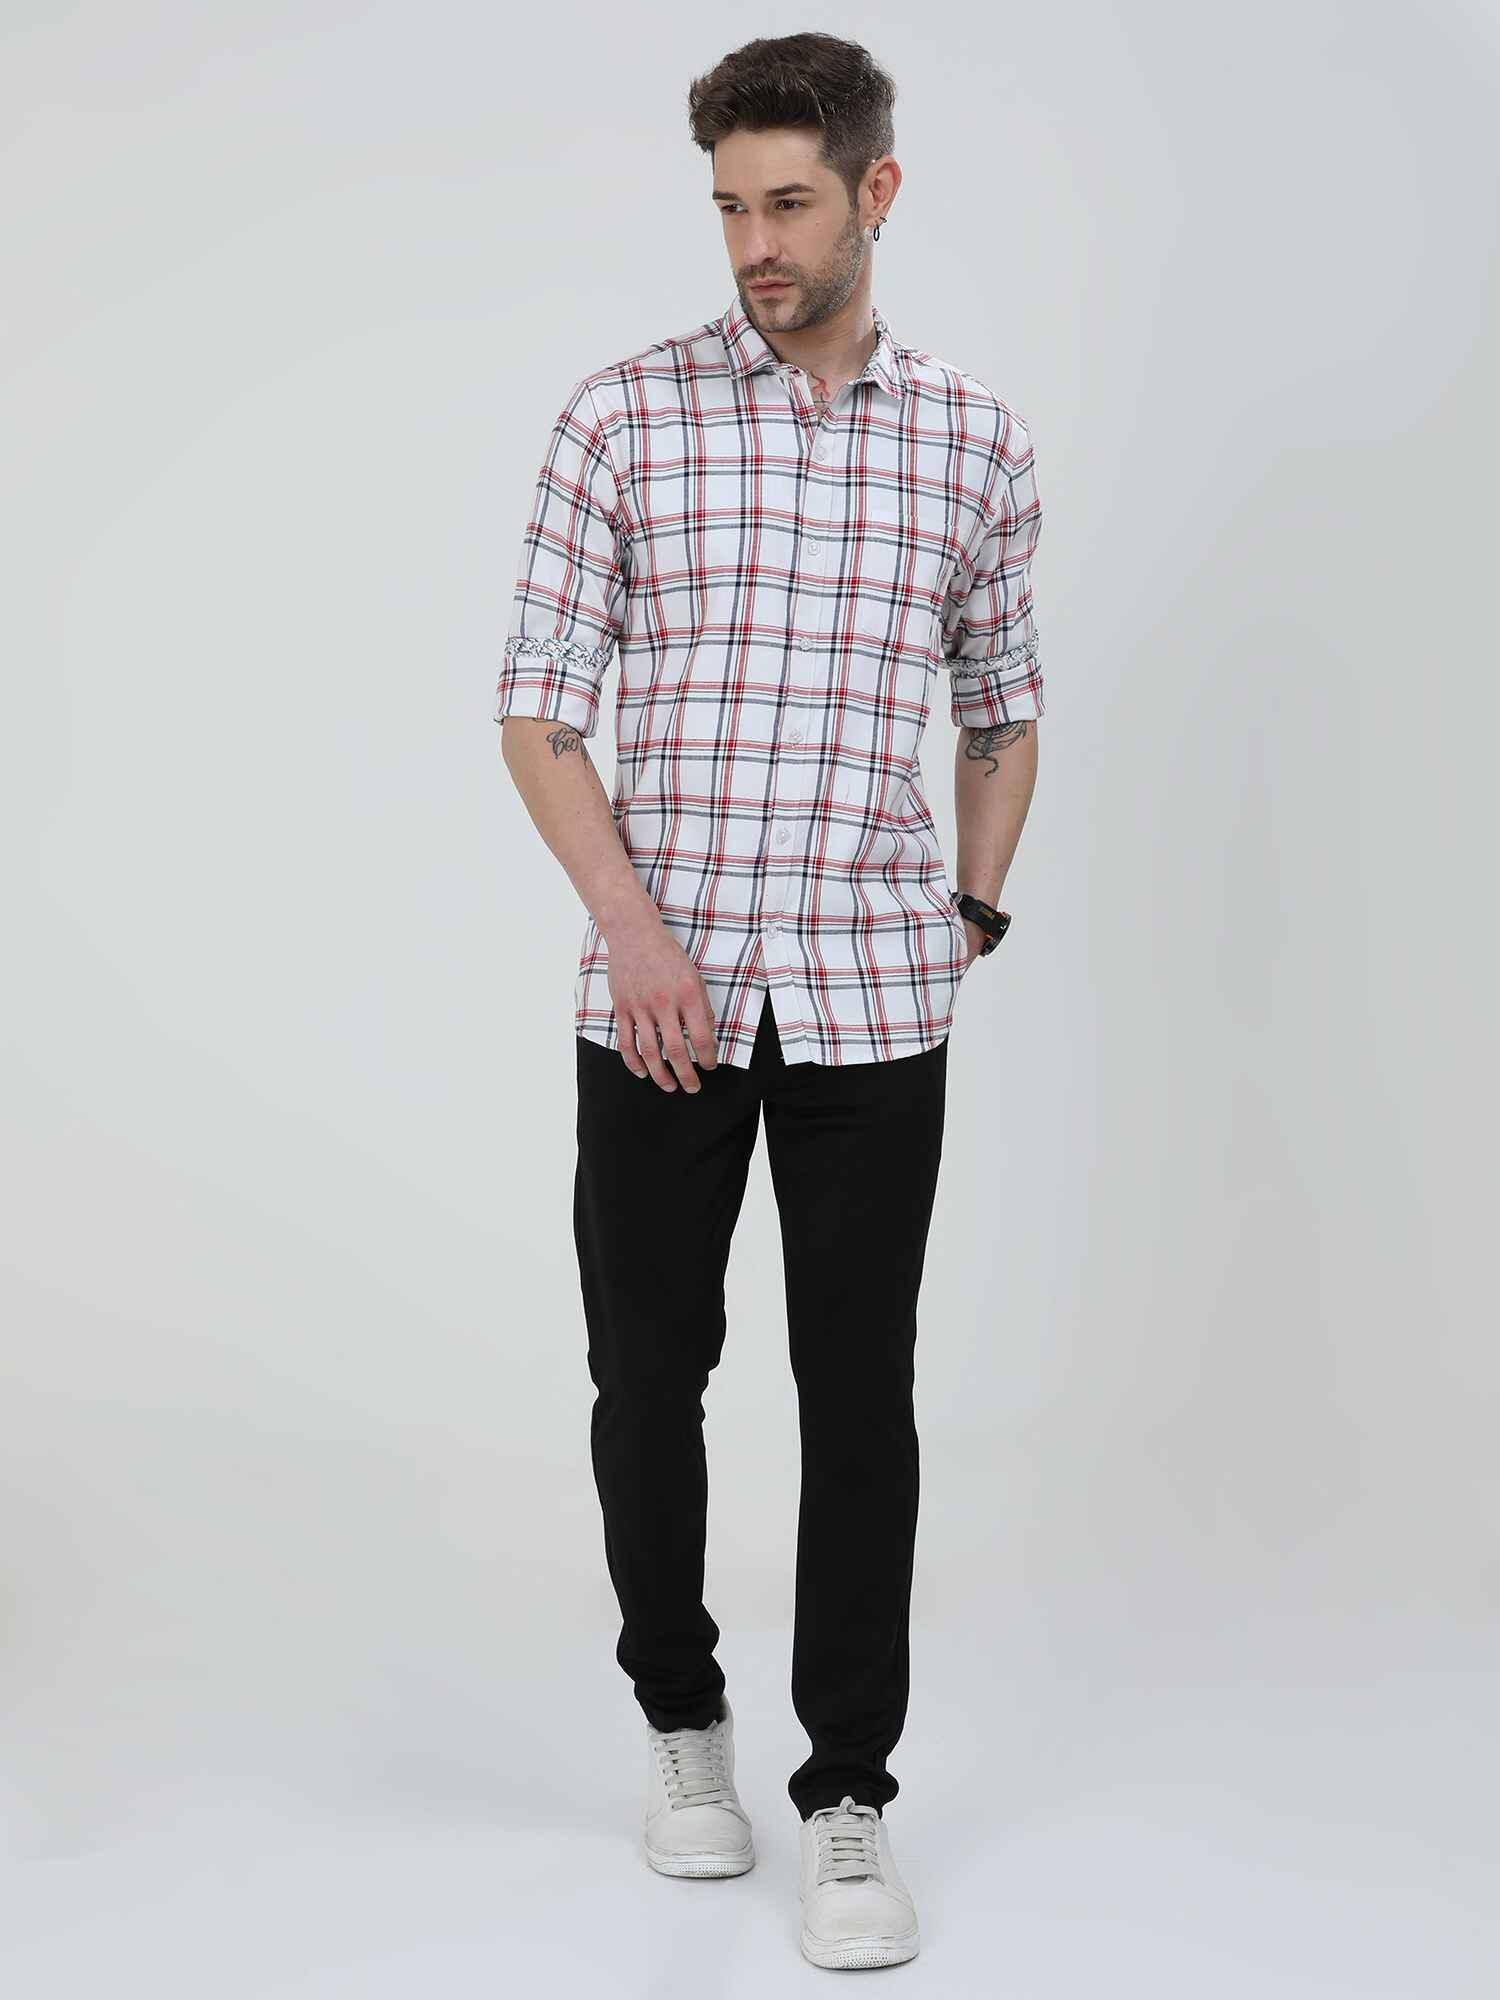 White and Red Checkered Cotton Shirt - Guniaa Fashions